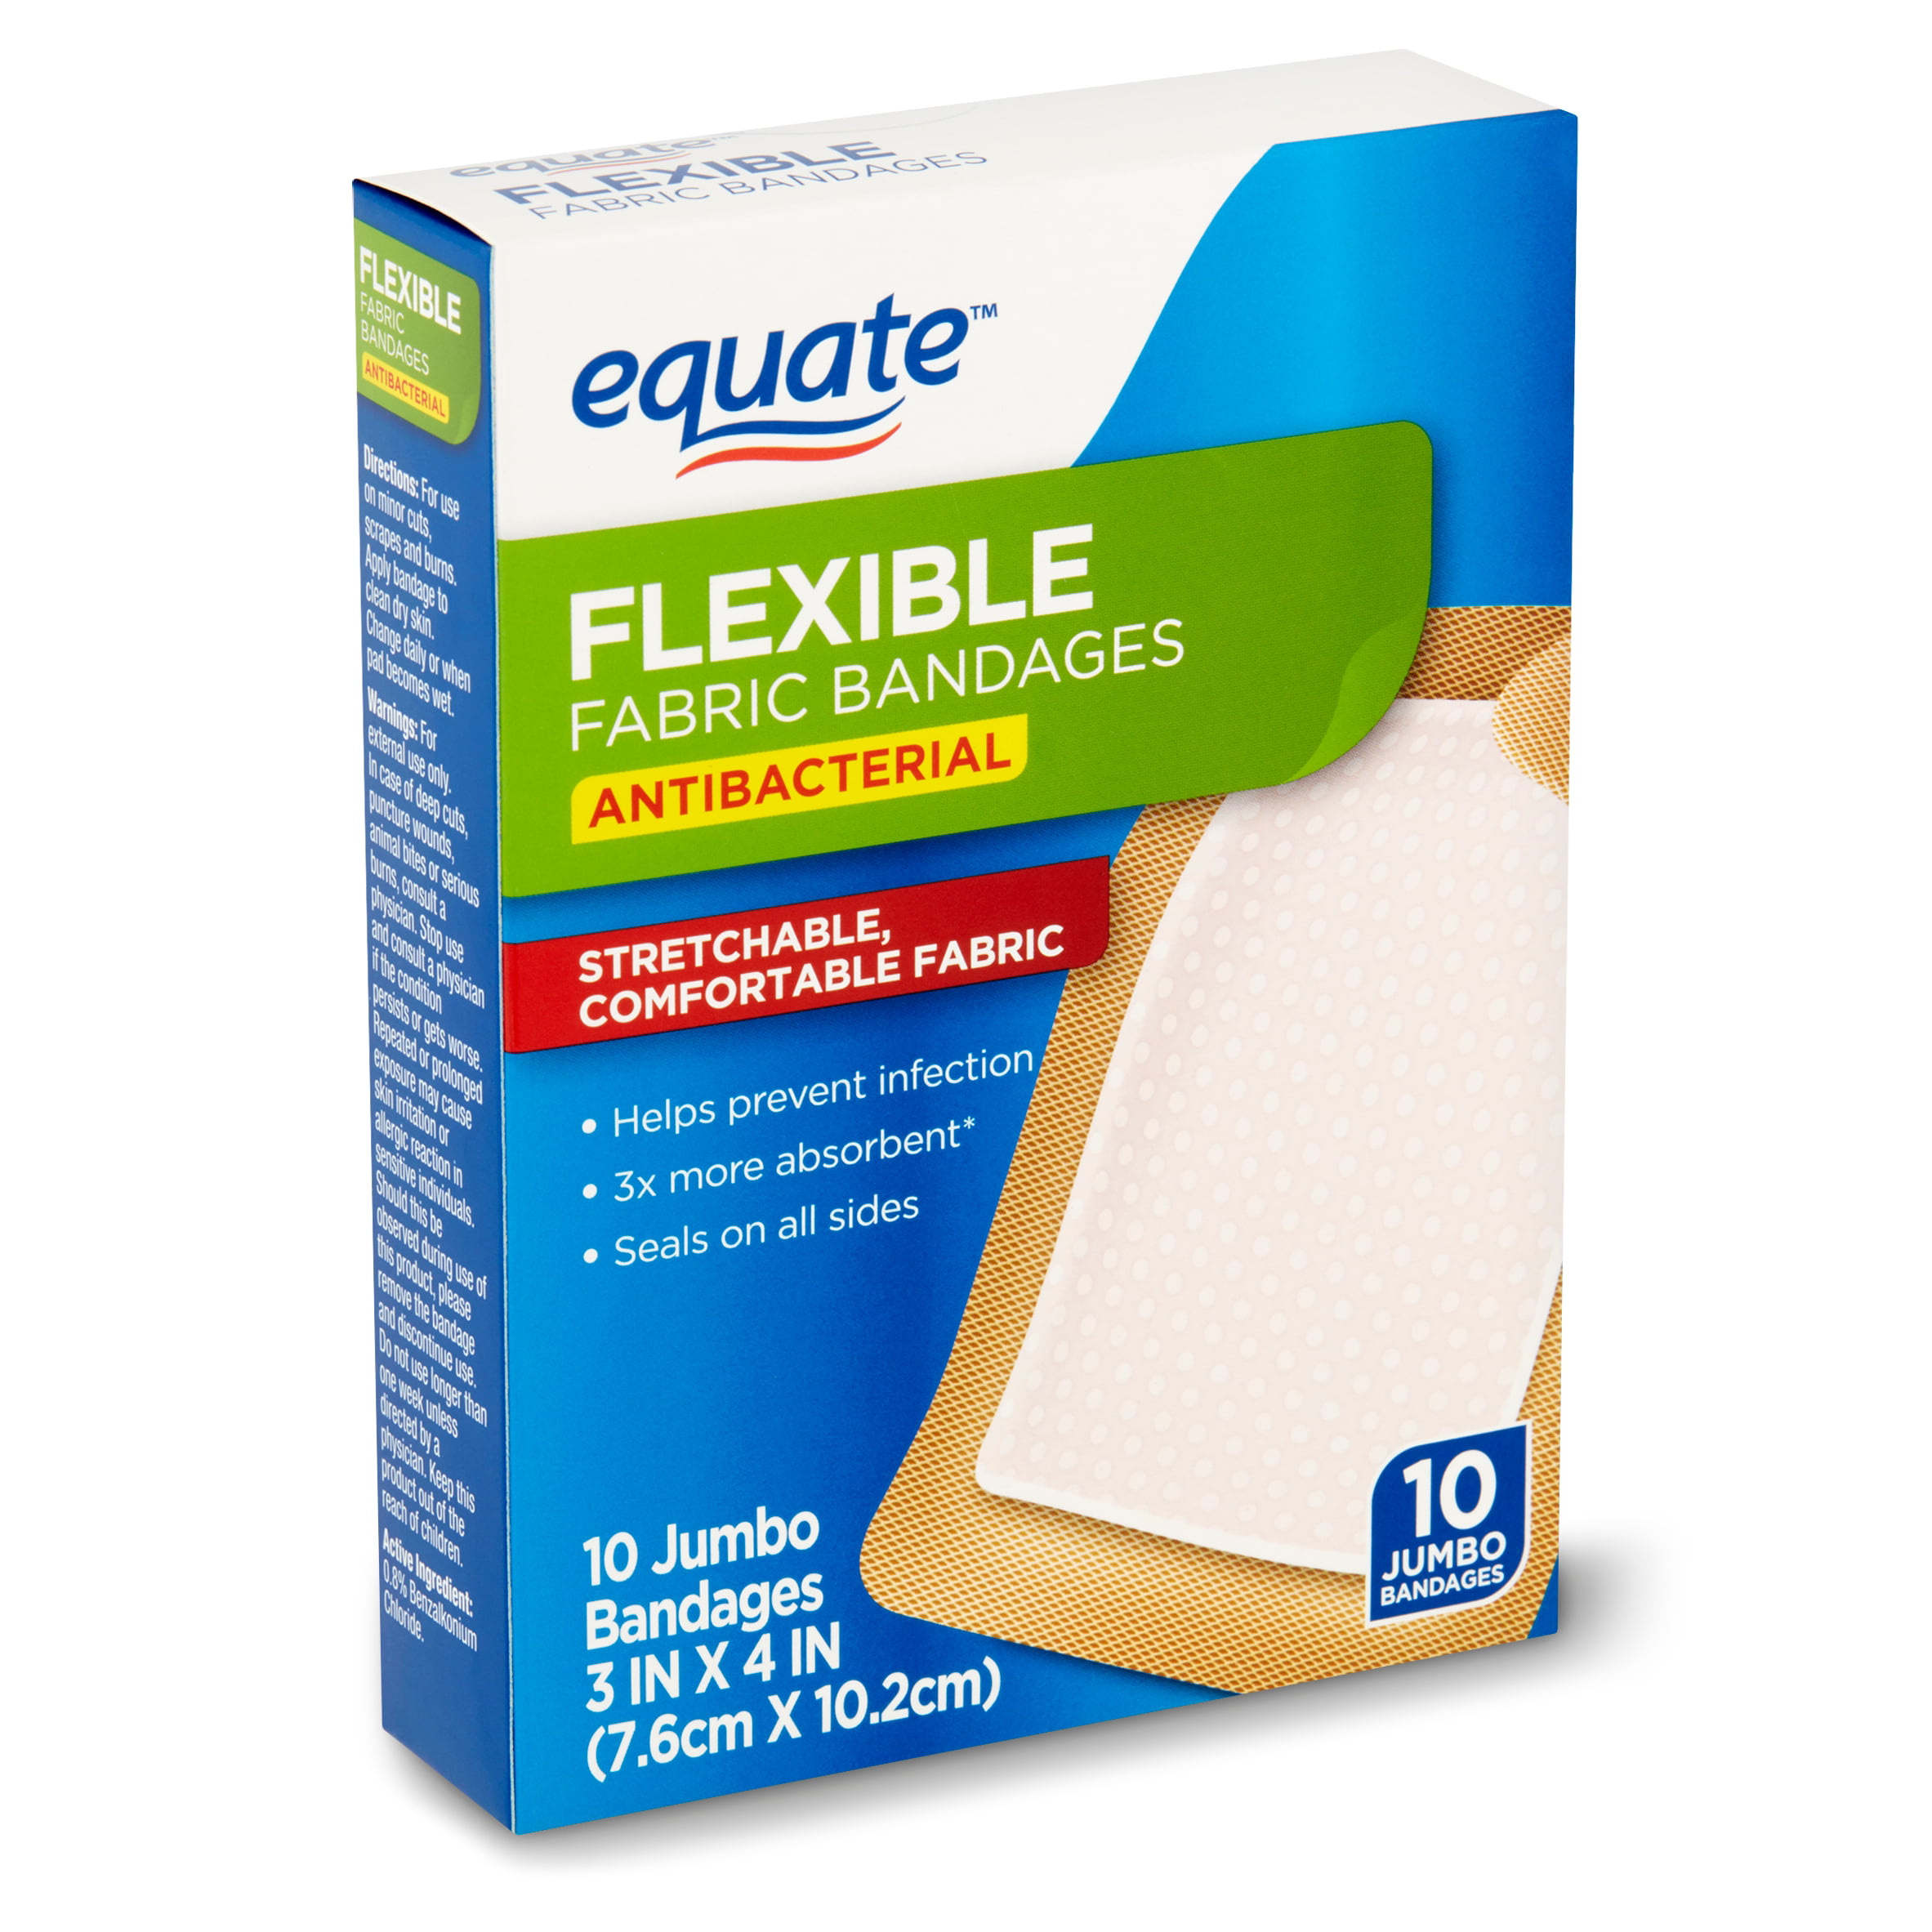 Equate Antibacterial Flexible Fabric Bandages, 10 count